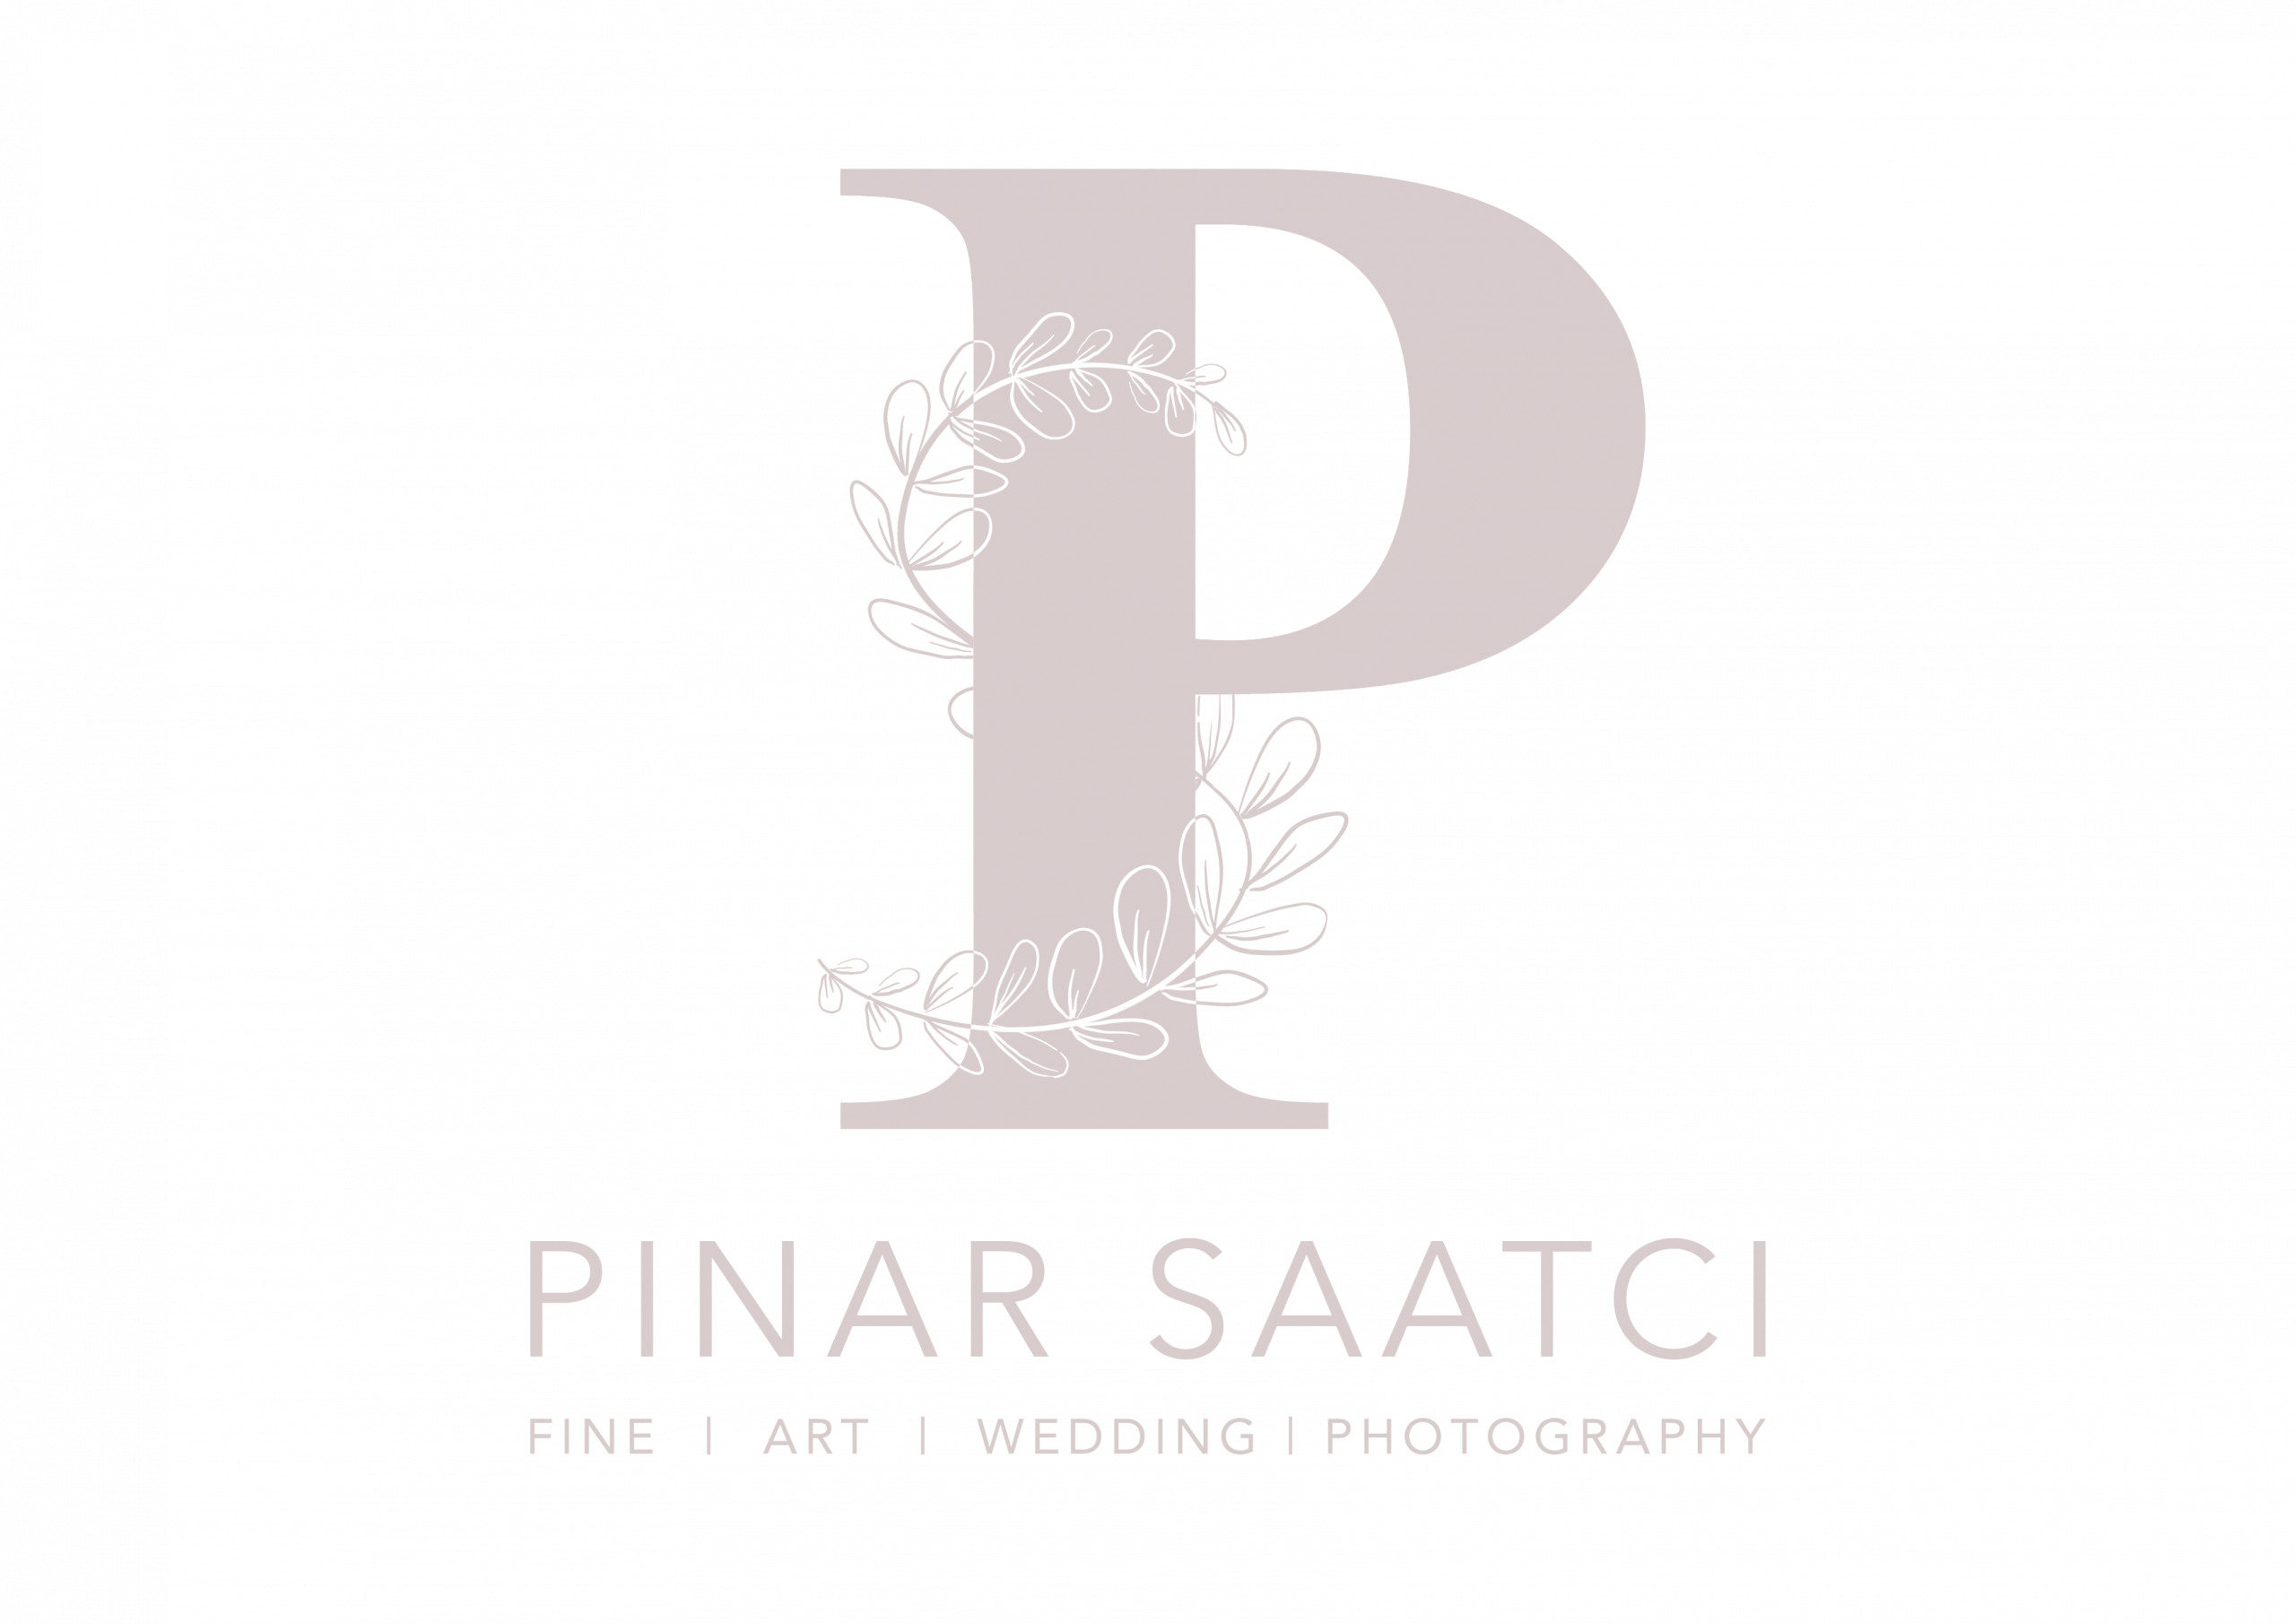 Pinar Saatci Fotodesign